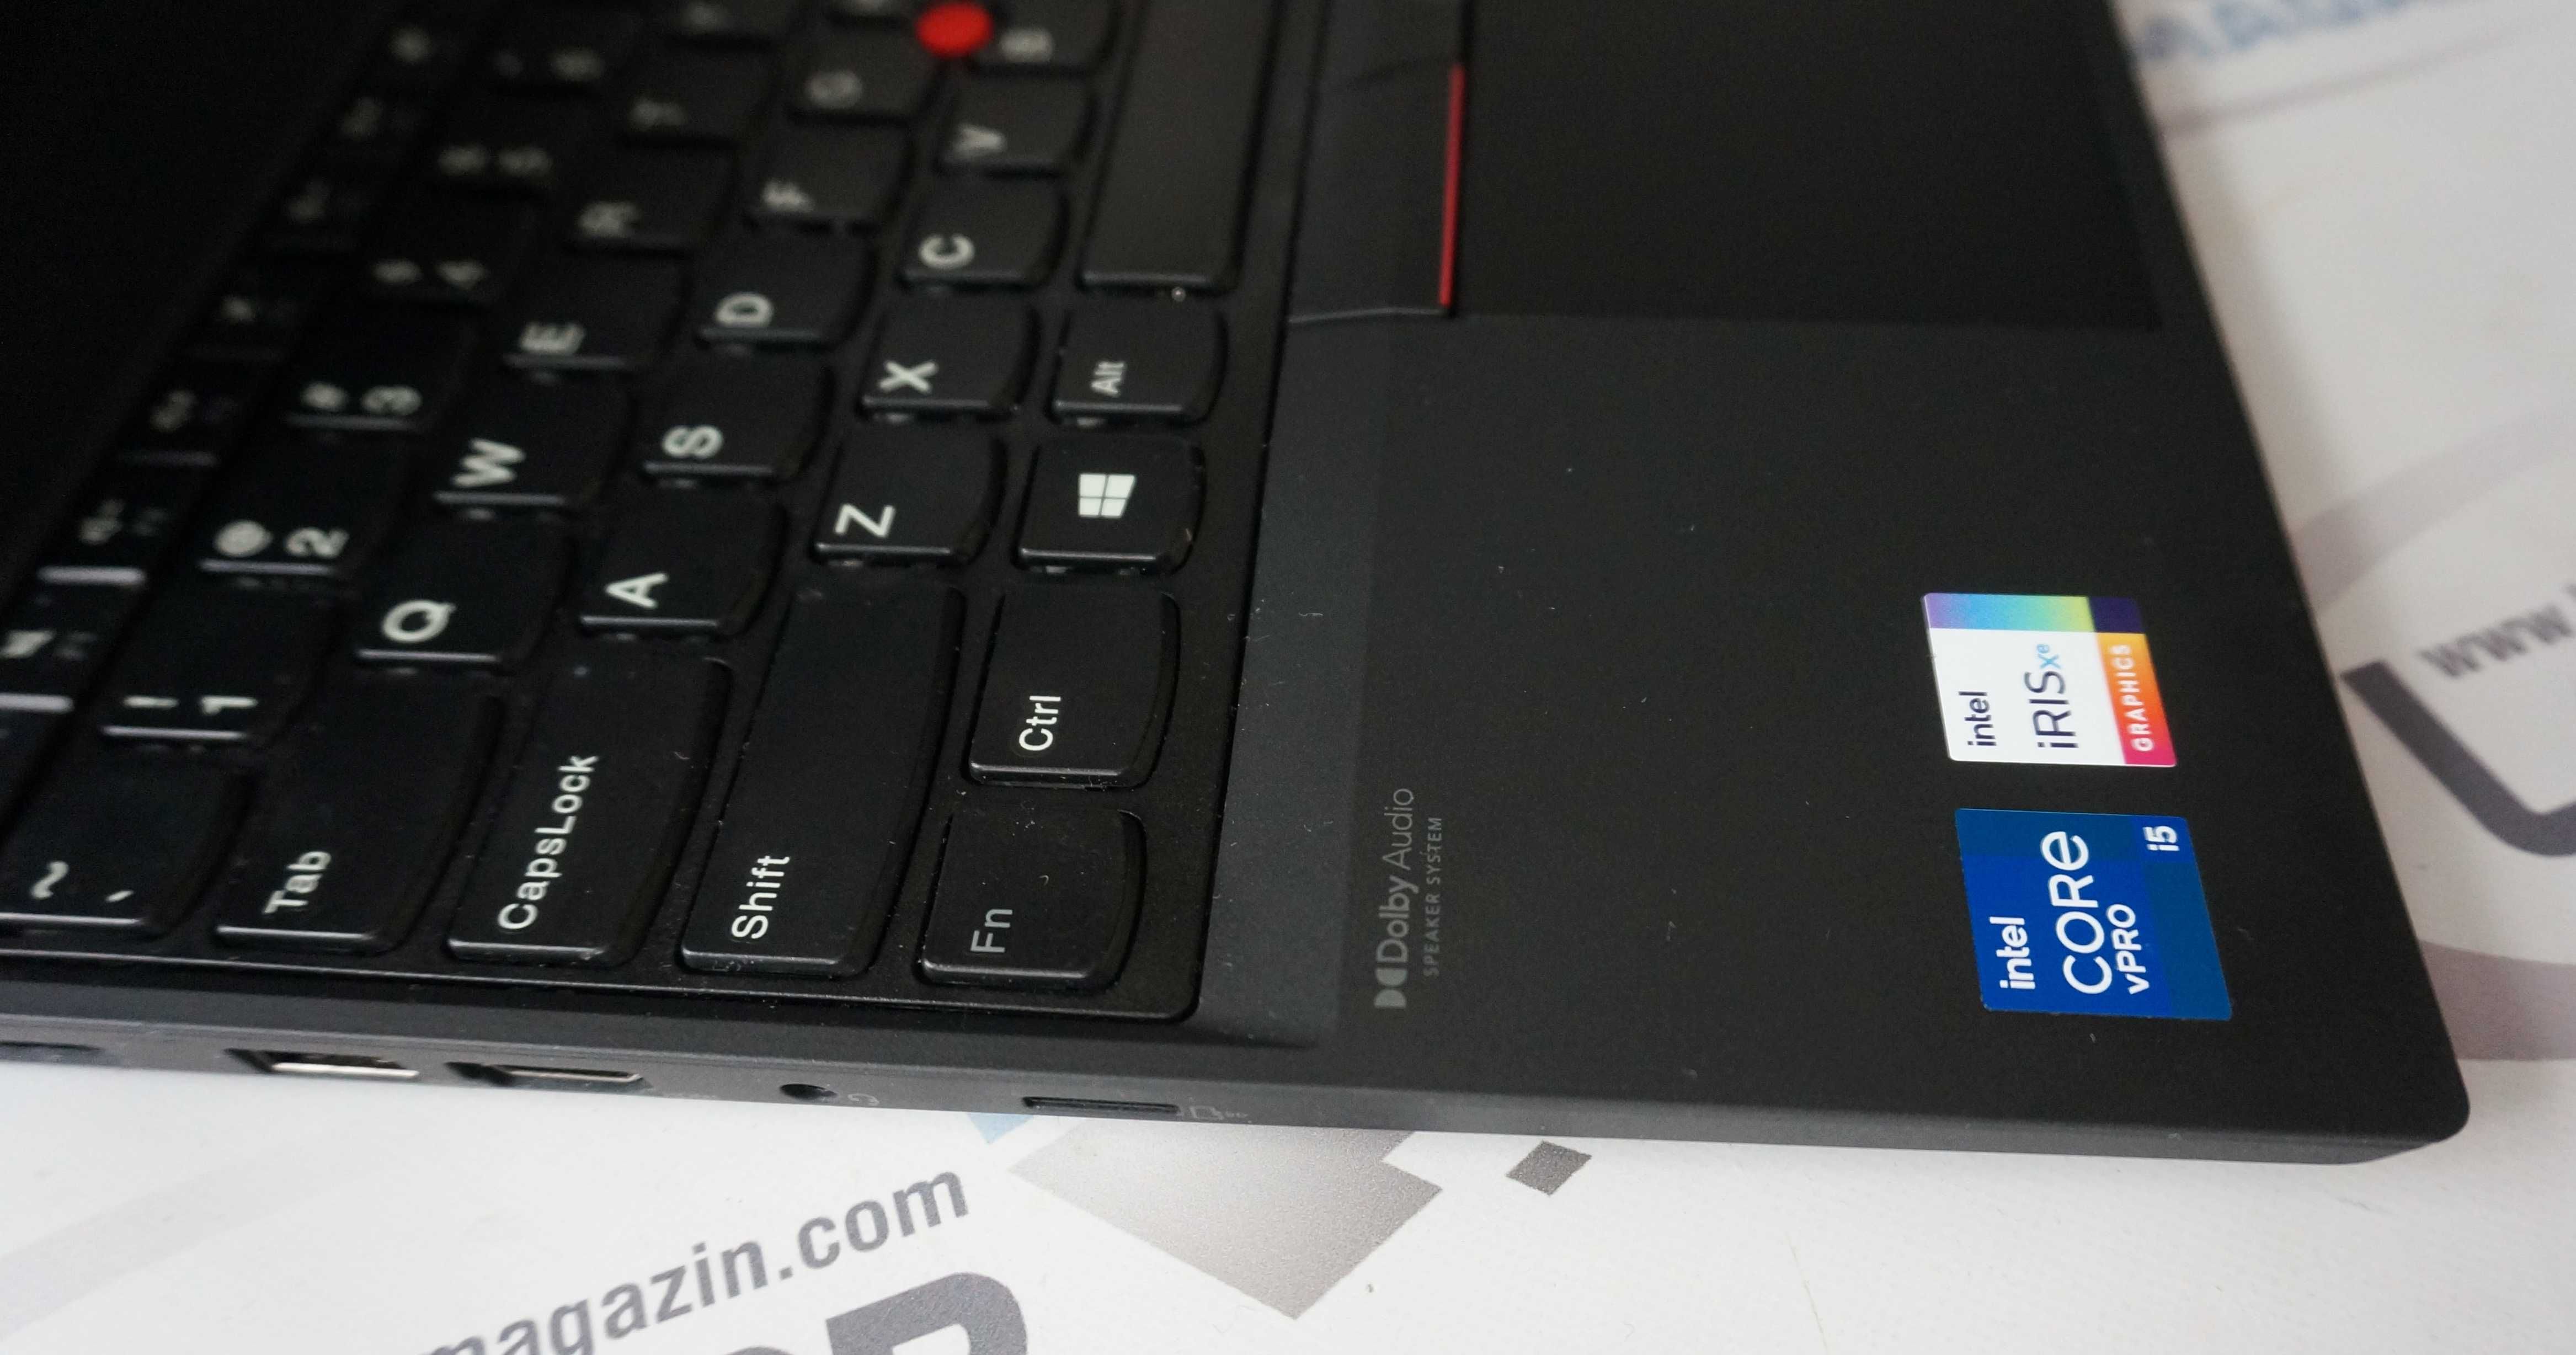 Lenovo ThinkPad Т15 (Core i5Quad 10 gen./Ips/Nvme)